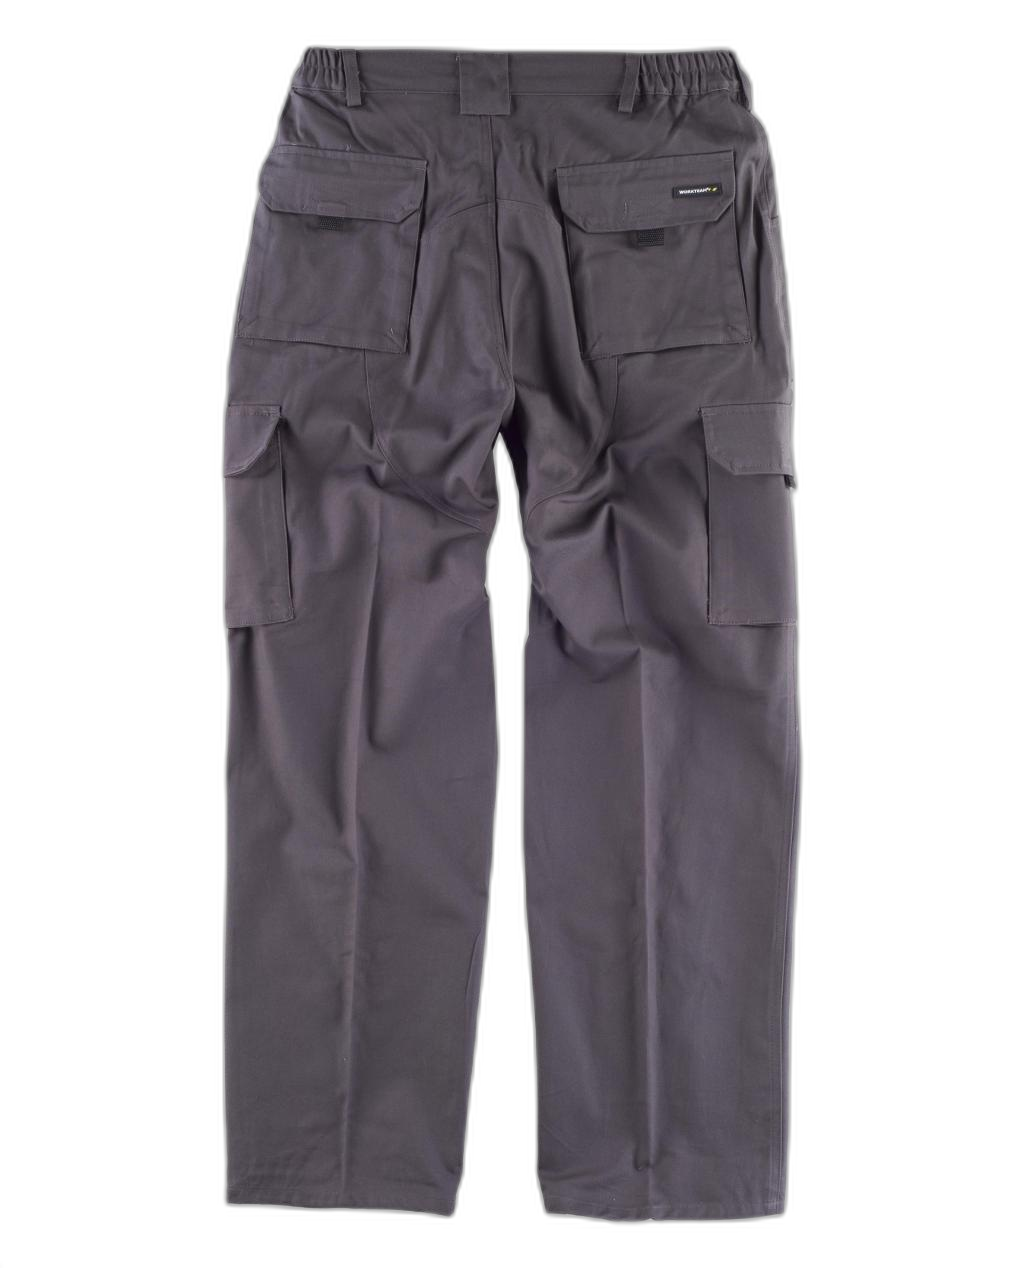 Pantalón linea 4 con elástico en cintura WORKTEAM WF1400